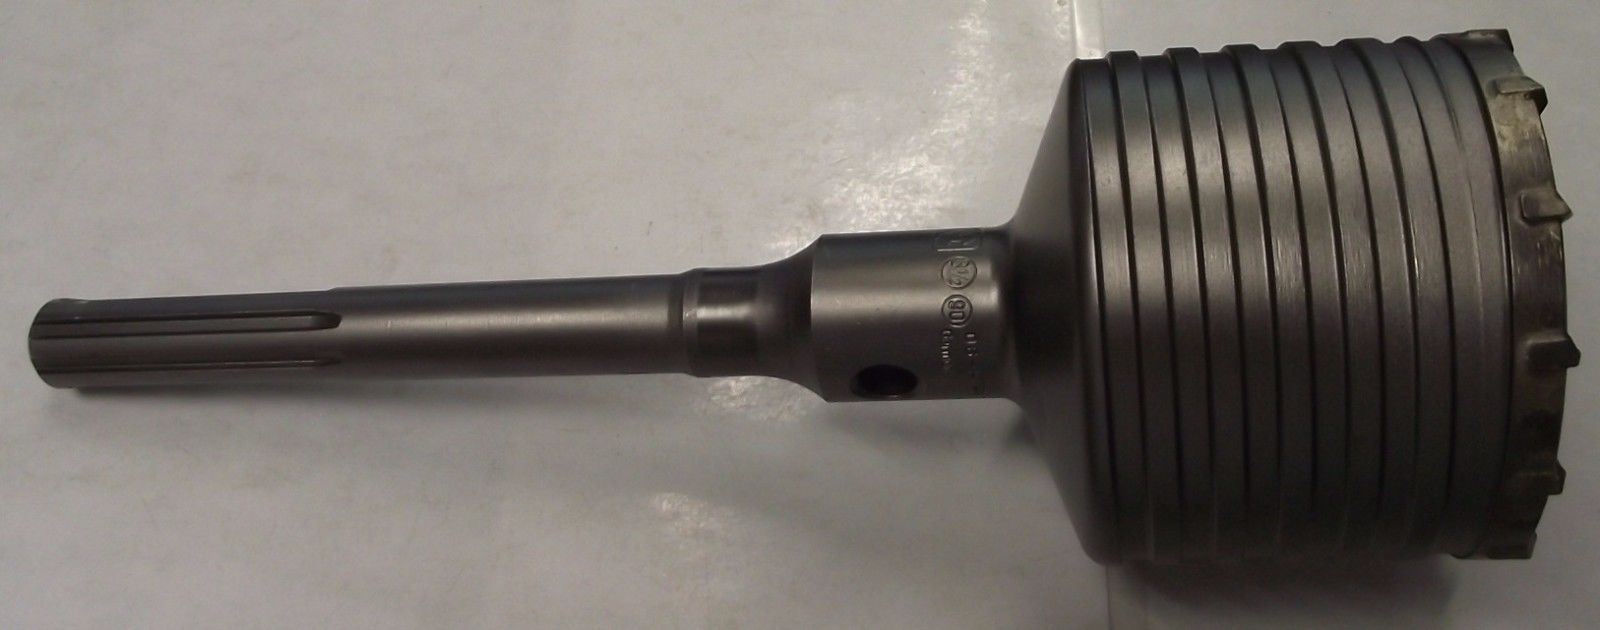 Bosch 37678 3-1/2" x 7" x 12" Max Core Bit Rotary Hammer Core Drill Bit Germany